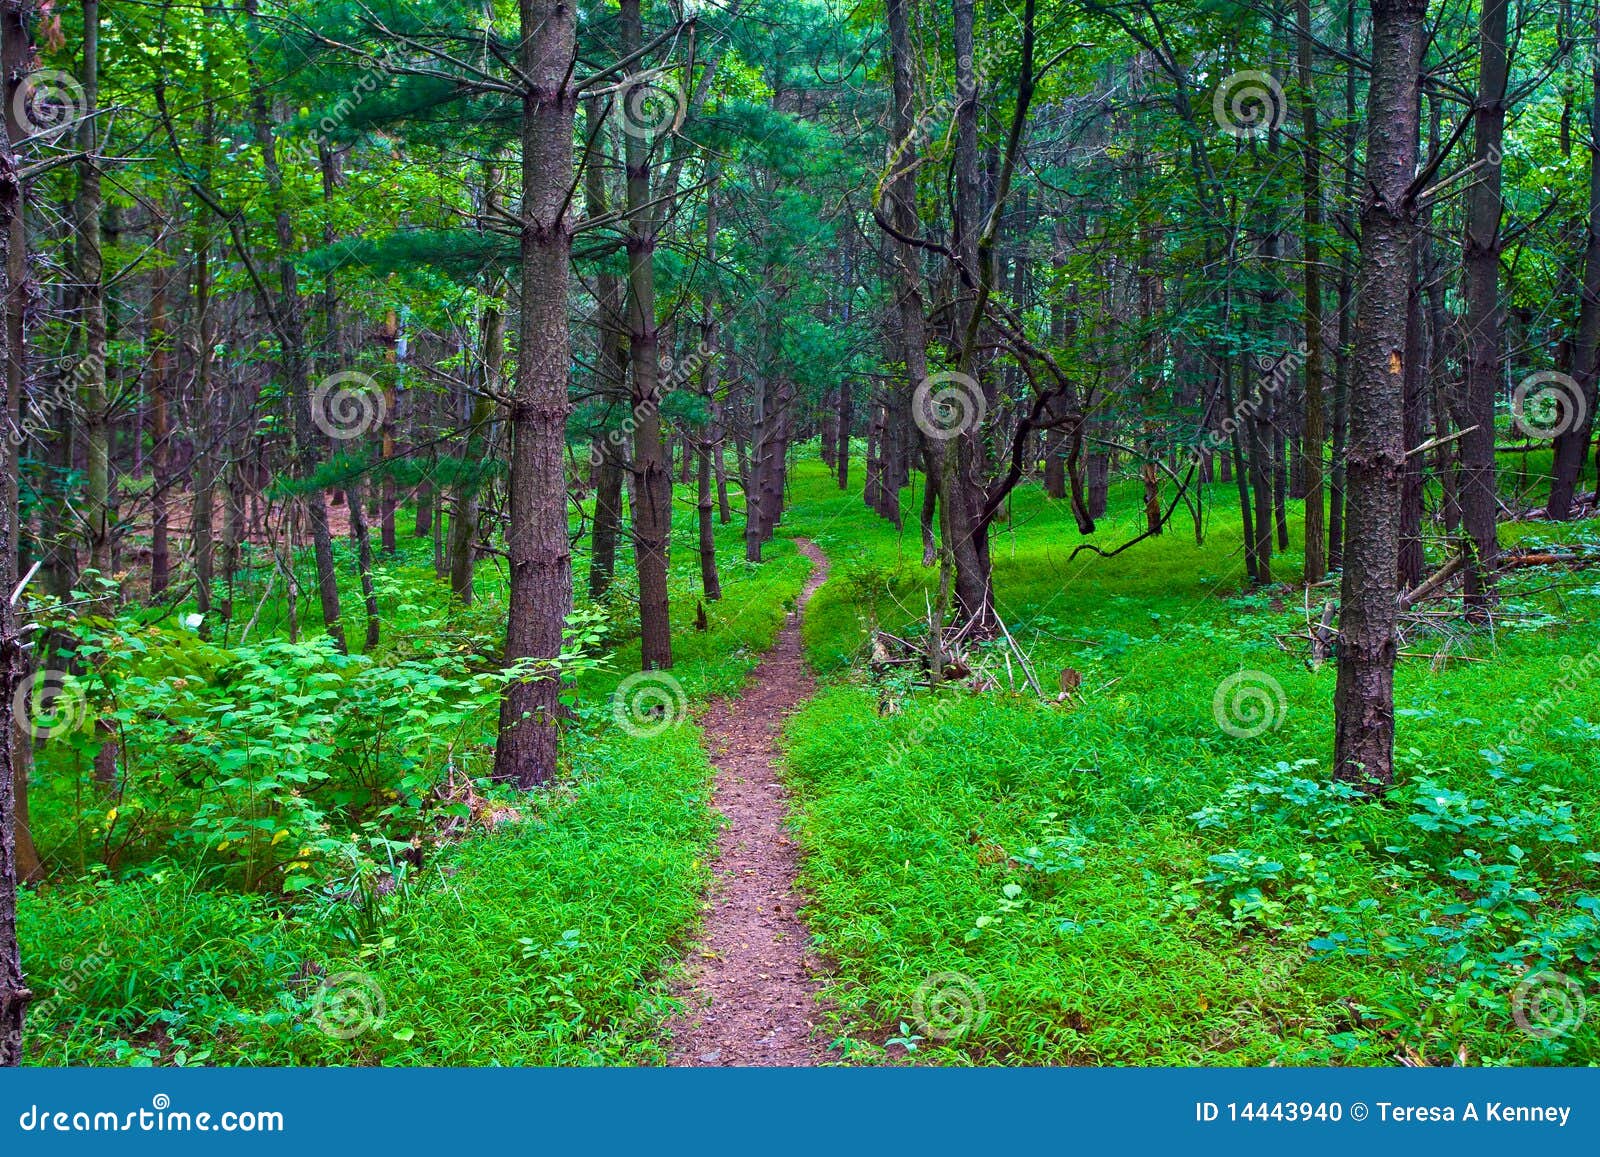 virginia lush forest trail